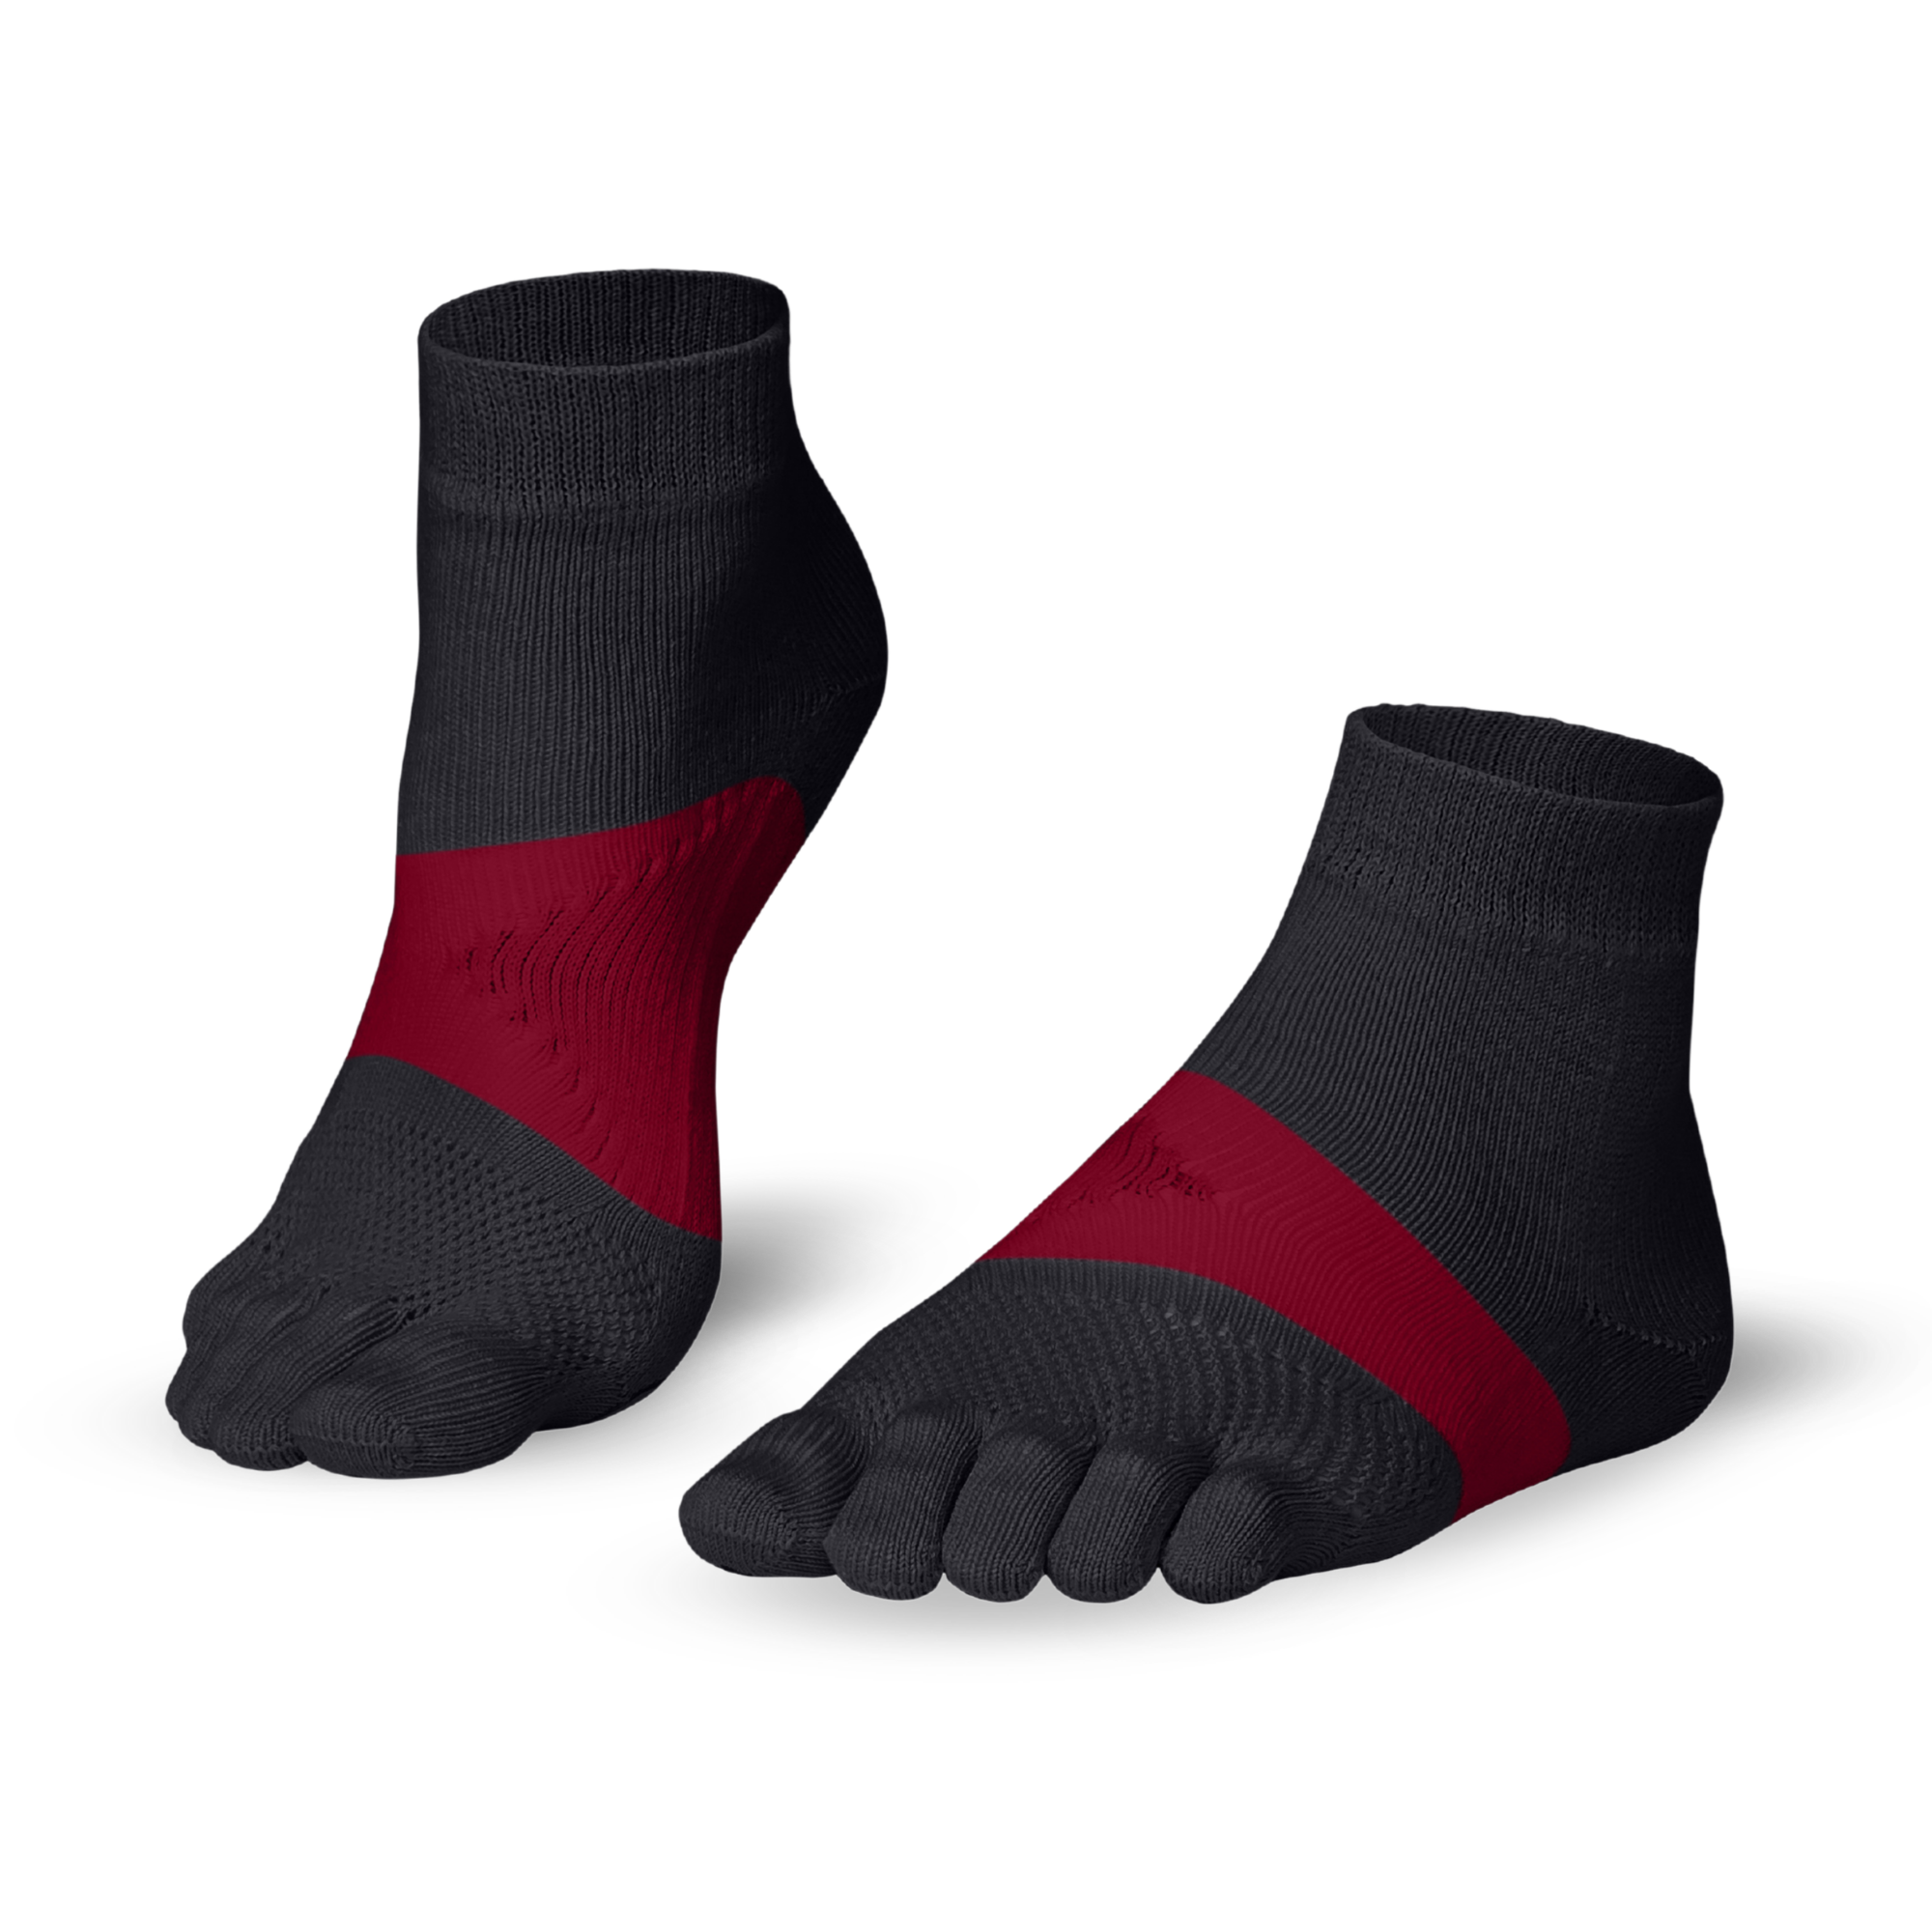 Tekaške nogavice TS - bistvene tekaške nogavice iz Knitida : sive / škrlatne